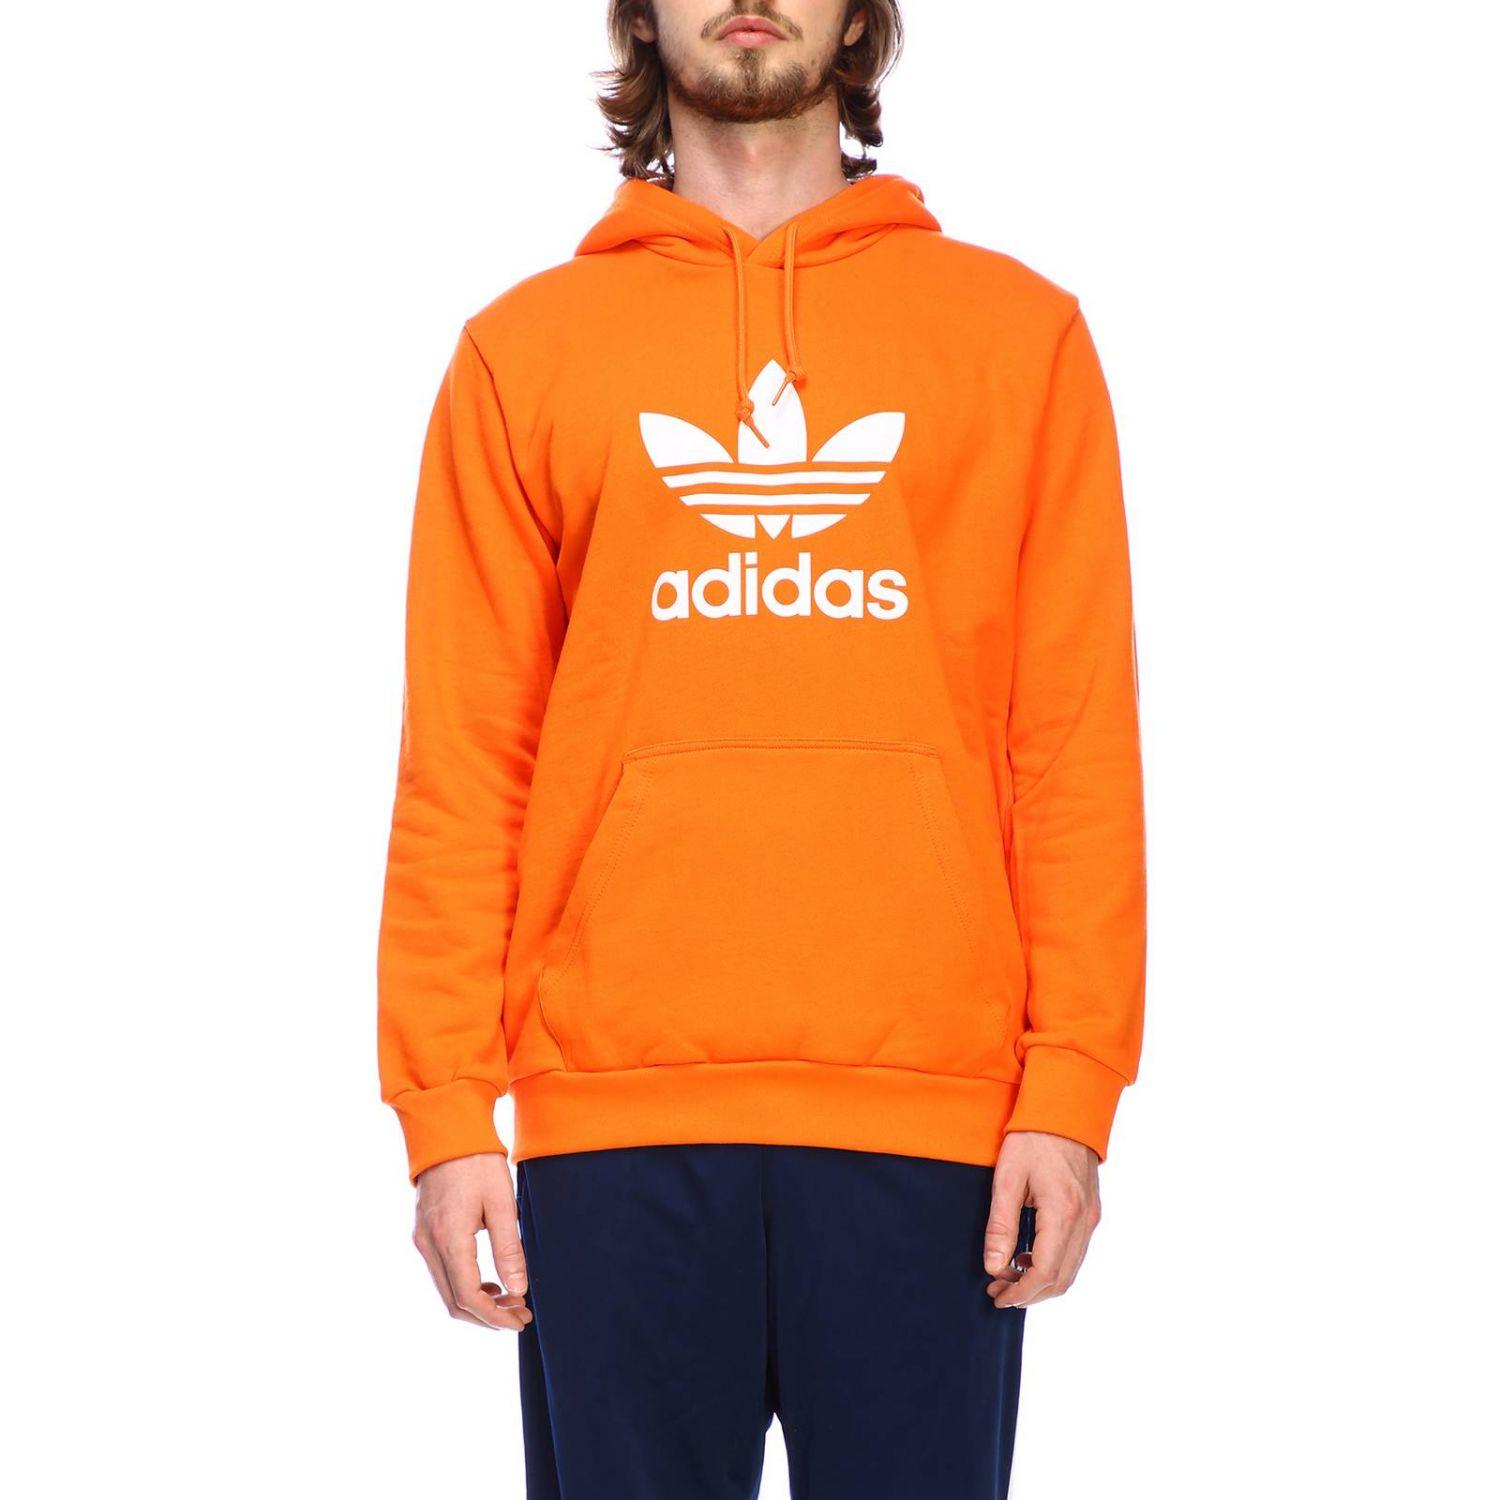 adidas Originals Cotton Men's Sweatshirt in Orange for Men - Lyst